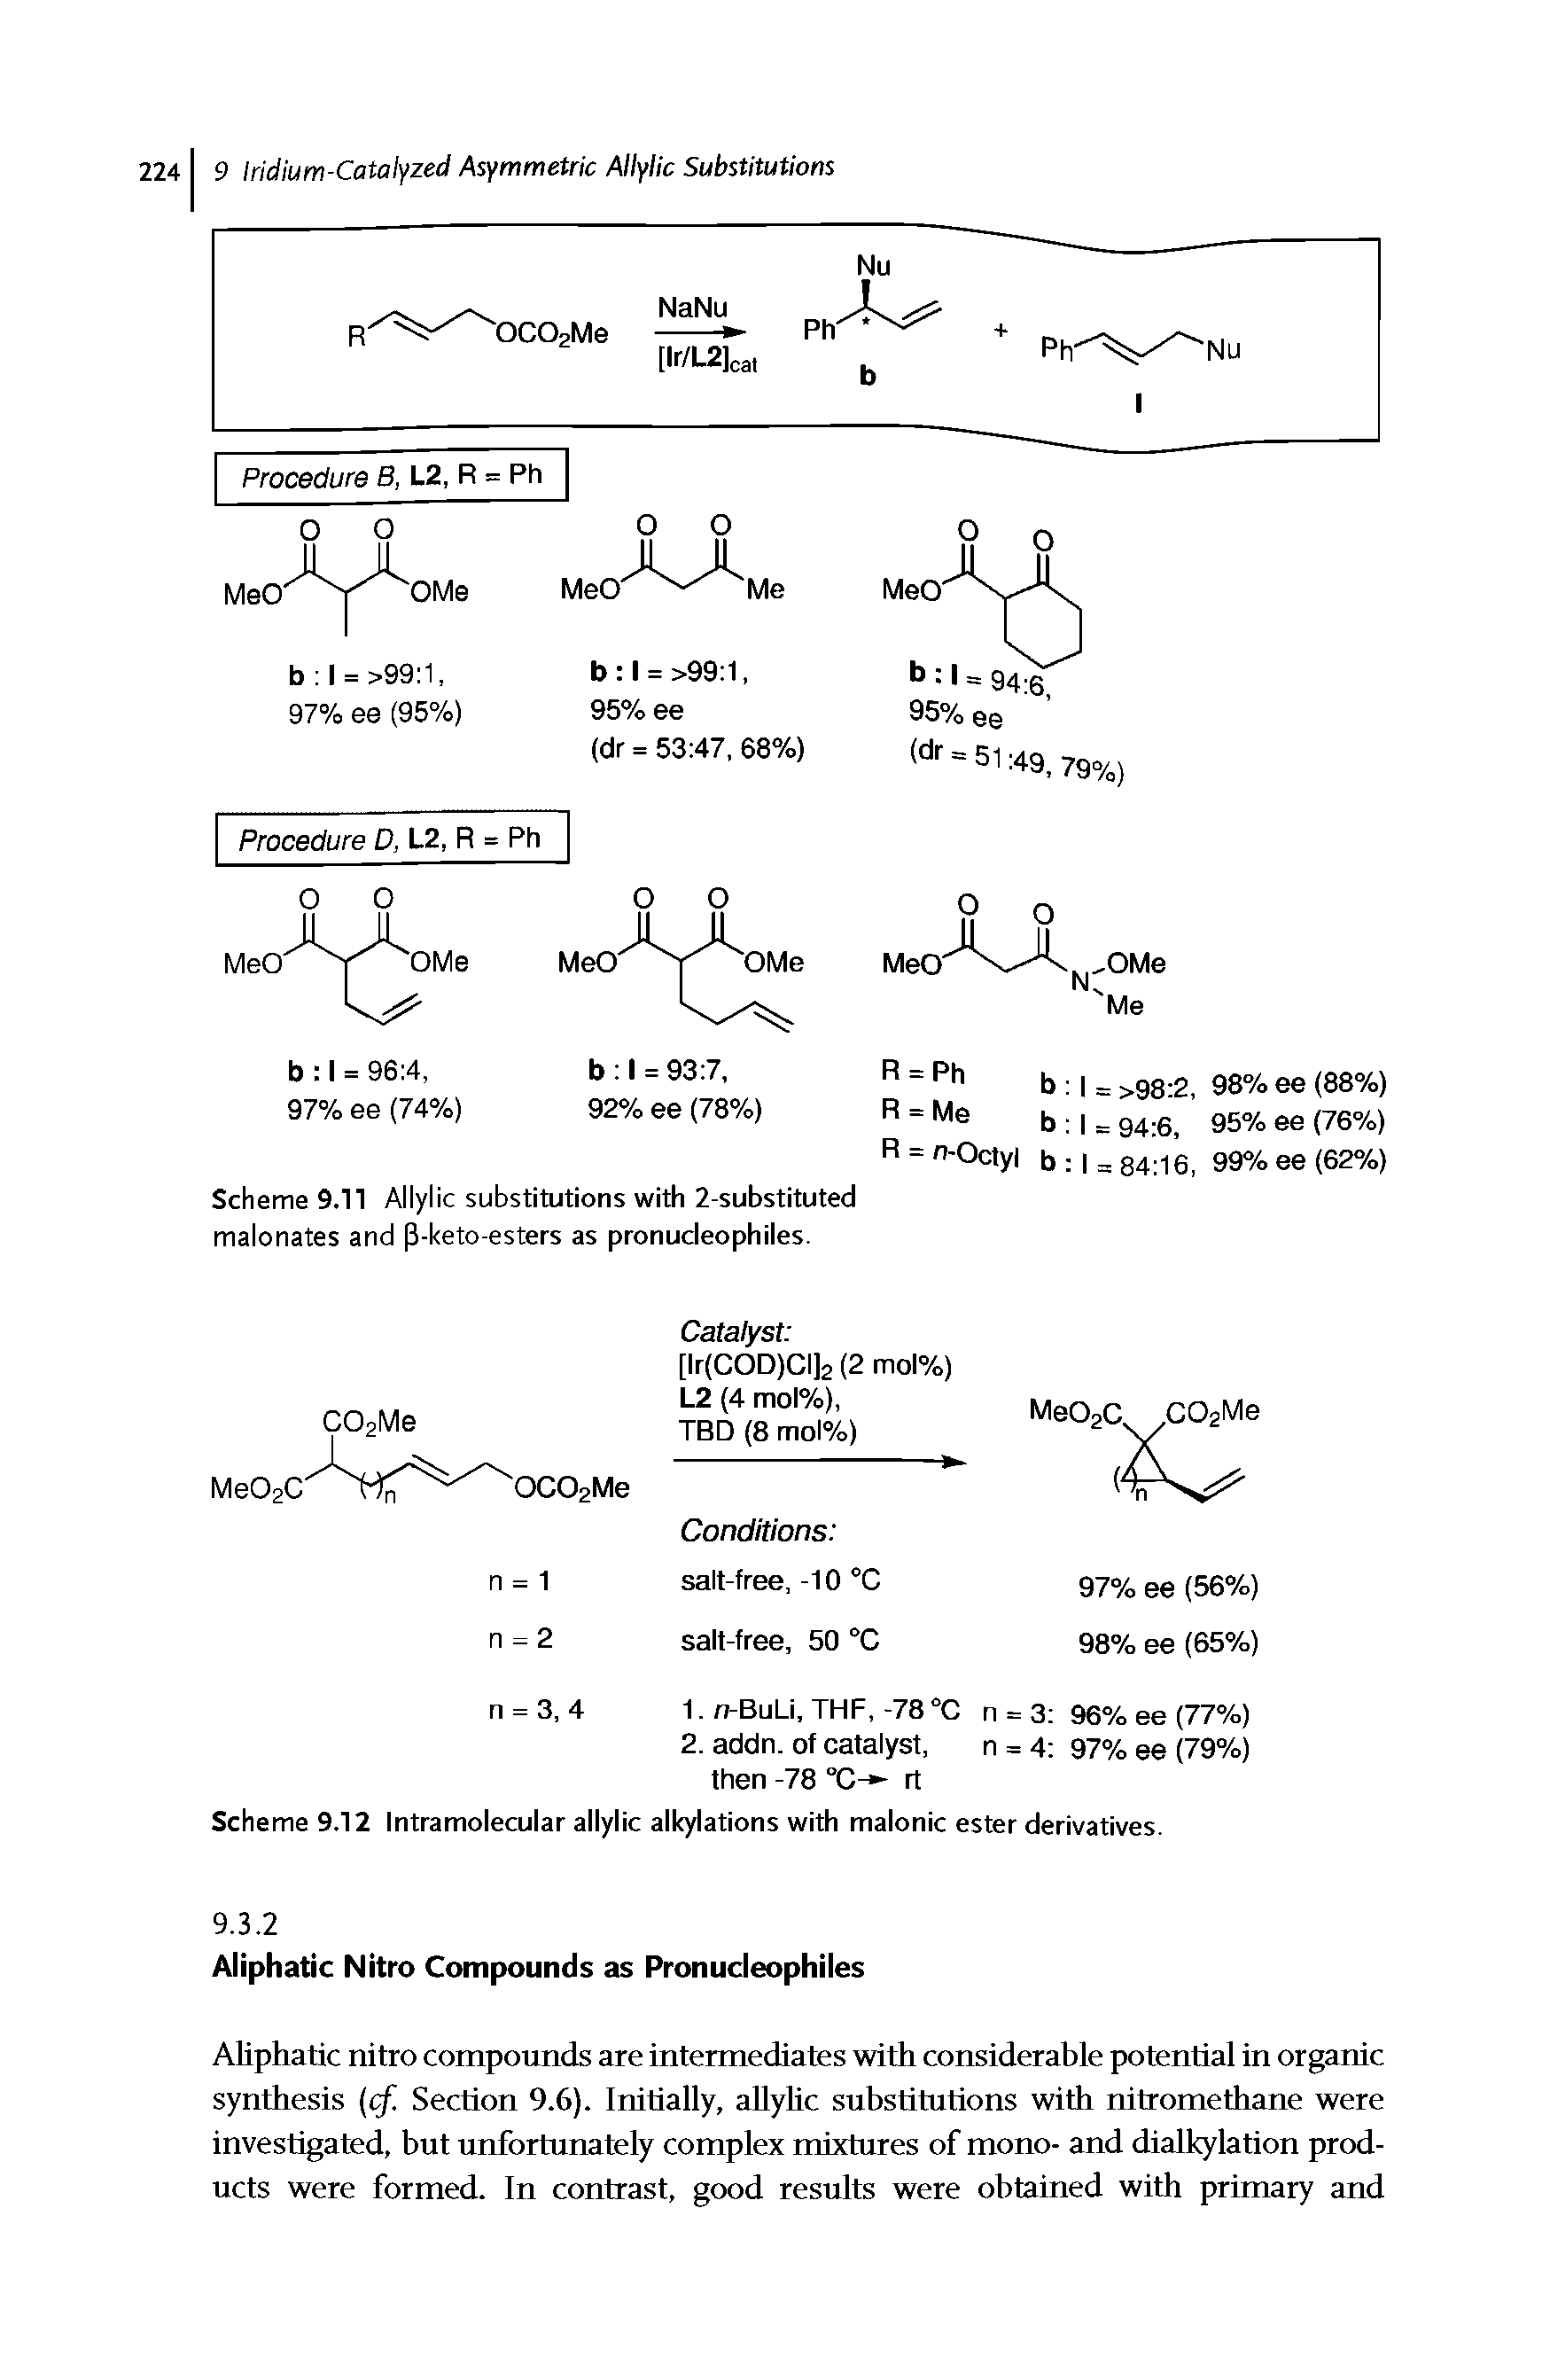 Scheme 9.12 Intramolecular allylic alkylations with malonic ester derivatives.